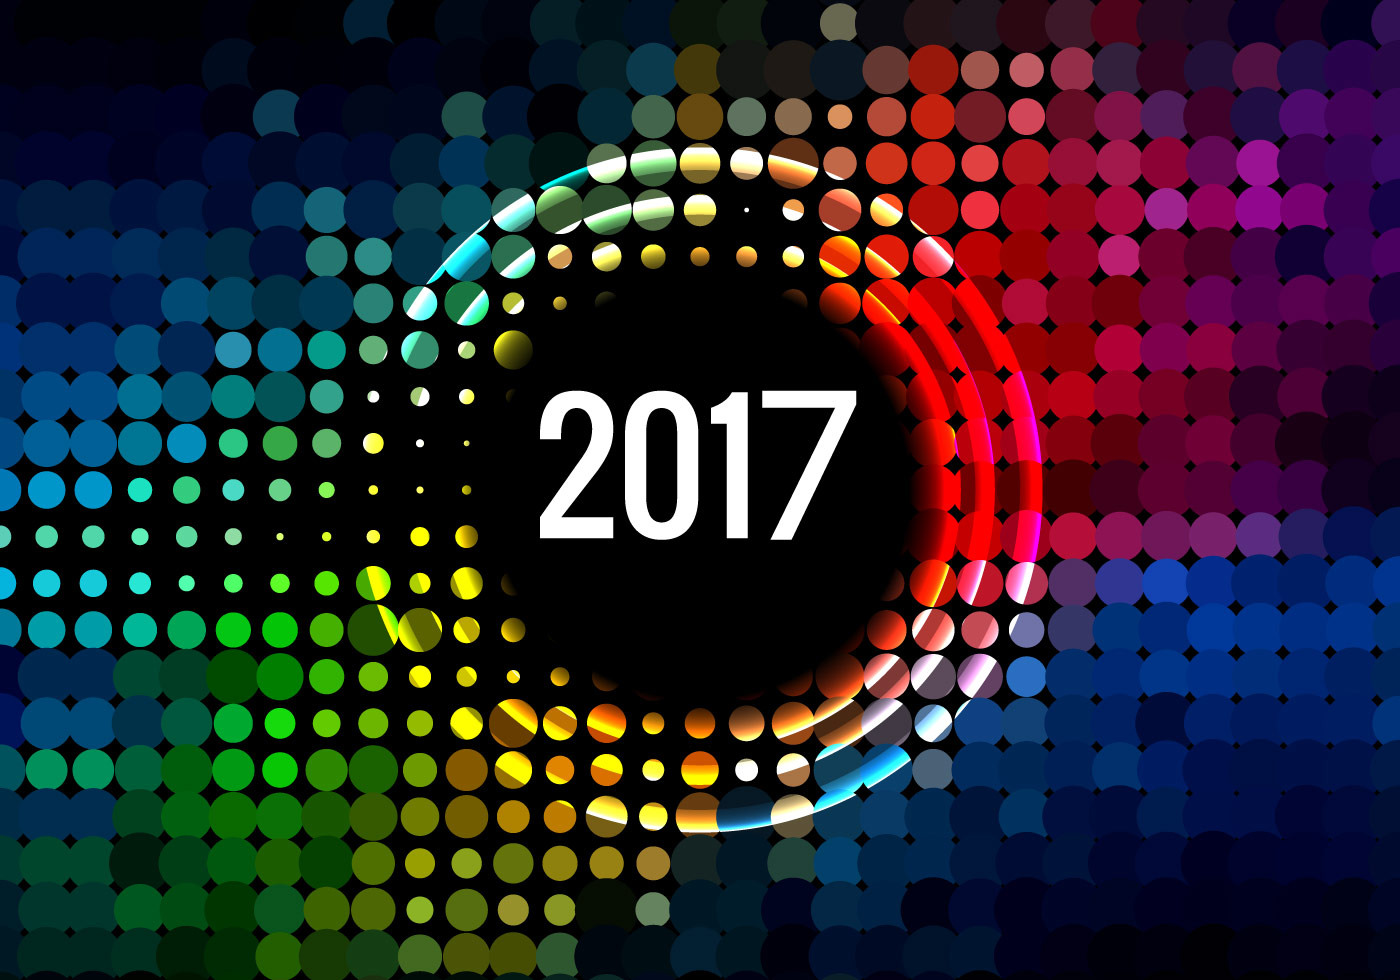 2017-happy-new-year-12.jpg (1400×980)